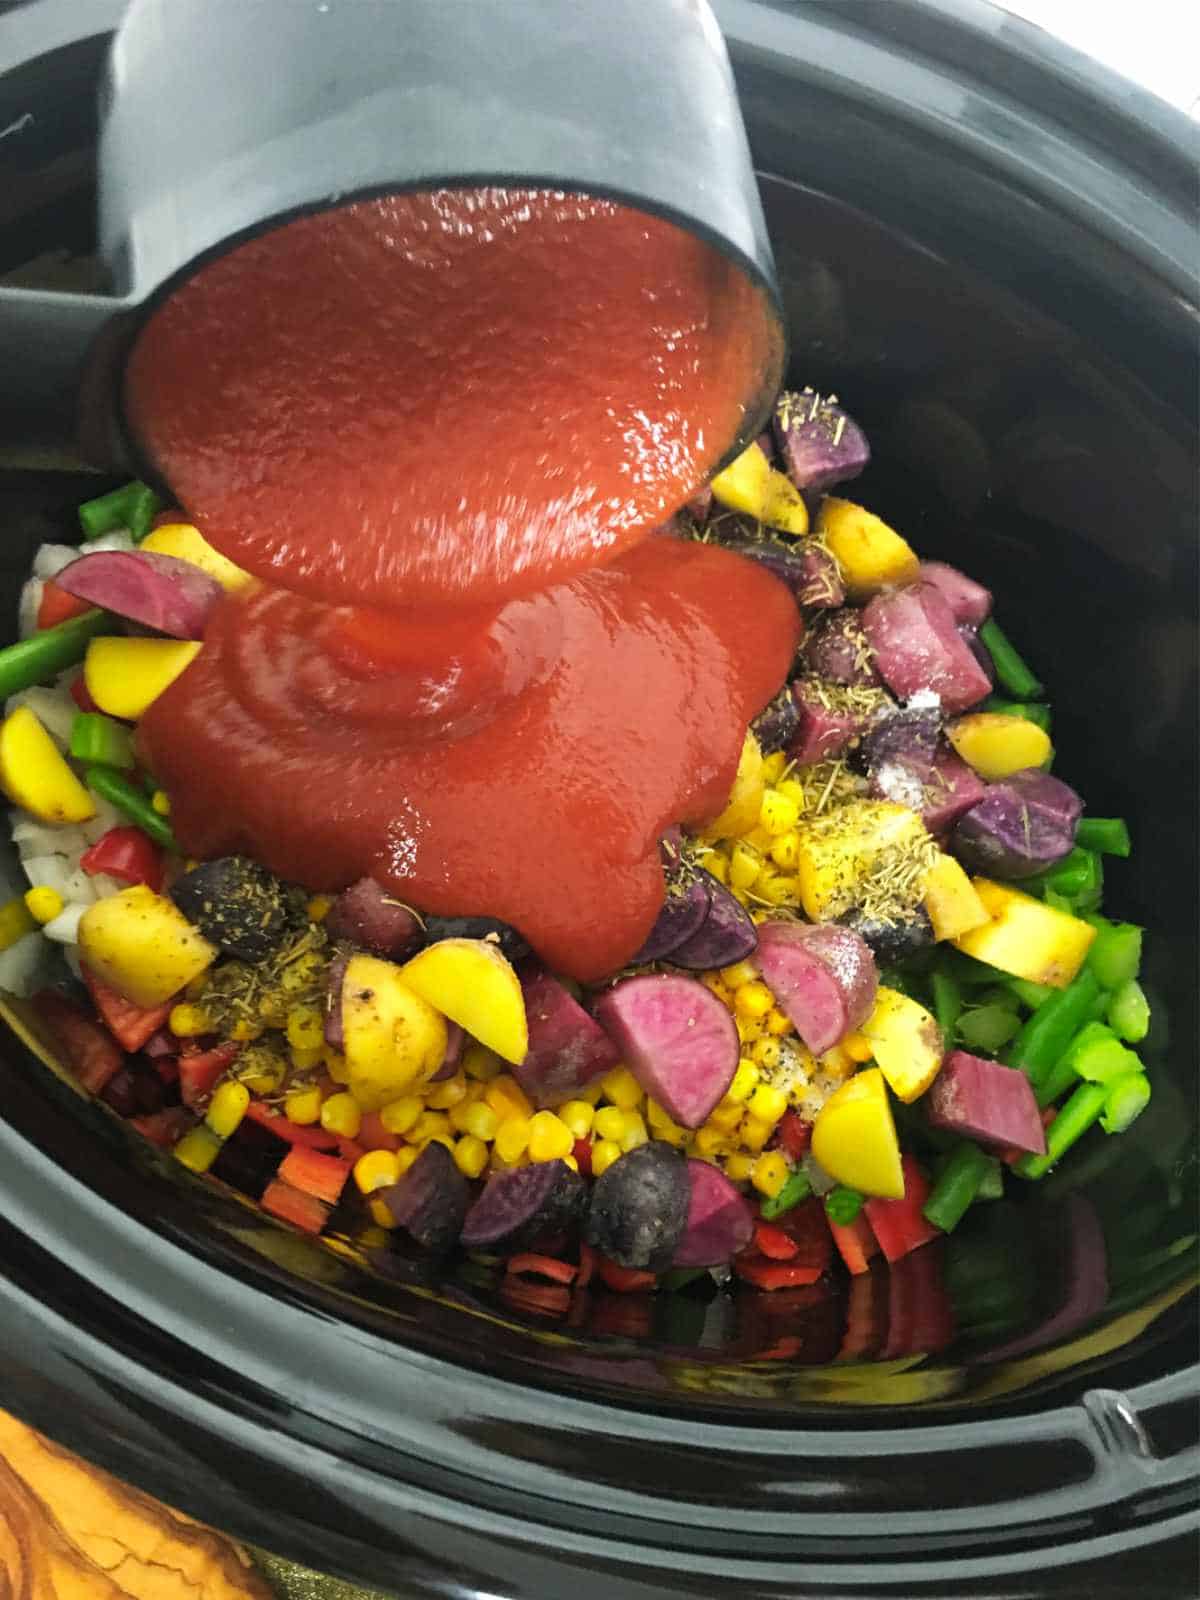 tomato sauce added to crockpot.